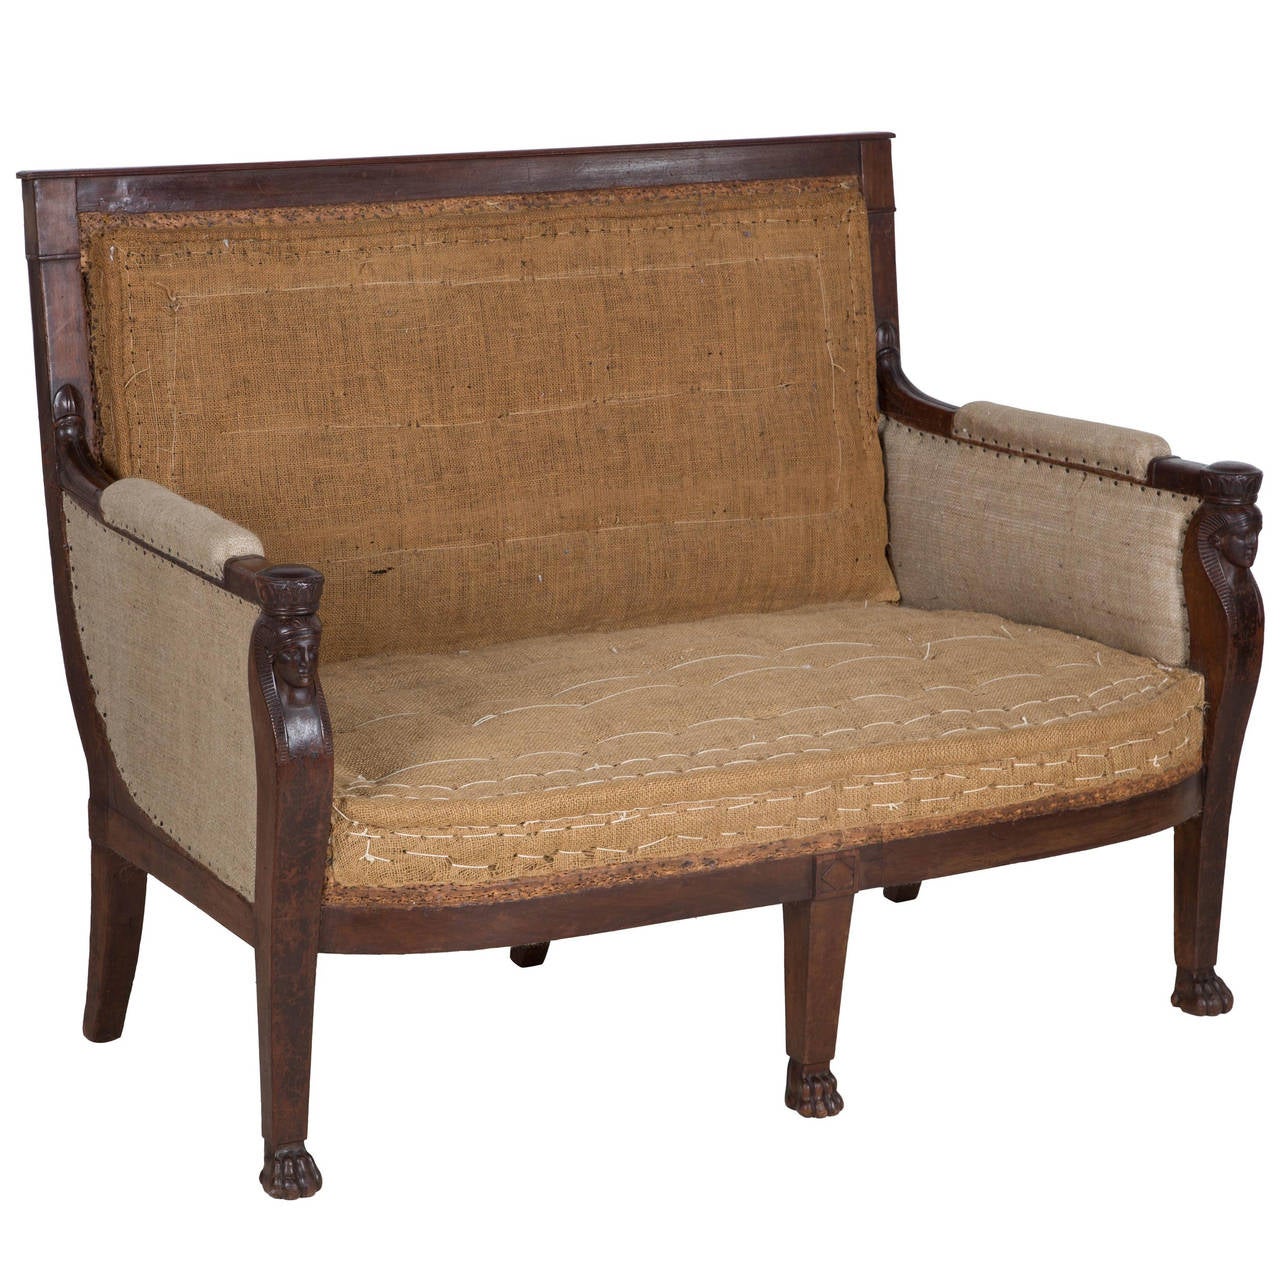 Superb quality, good size, early 19th Century French mahogany sofa. Circa 1810